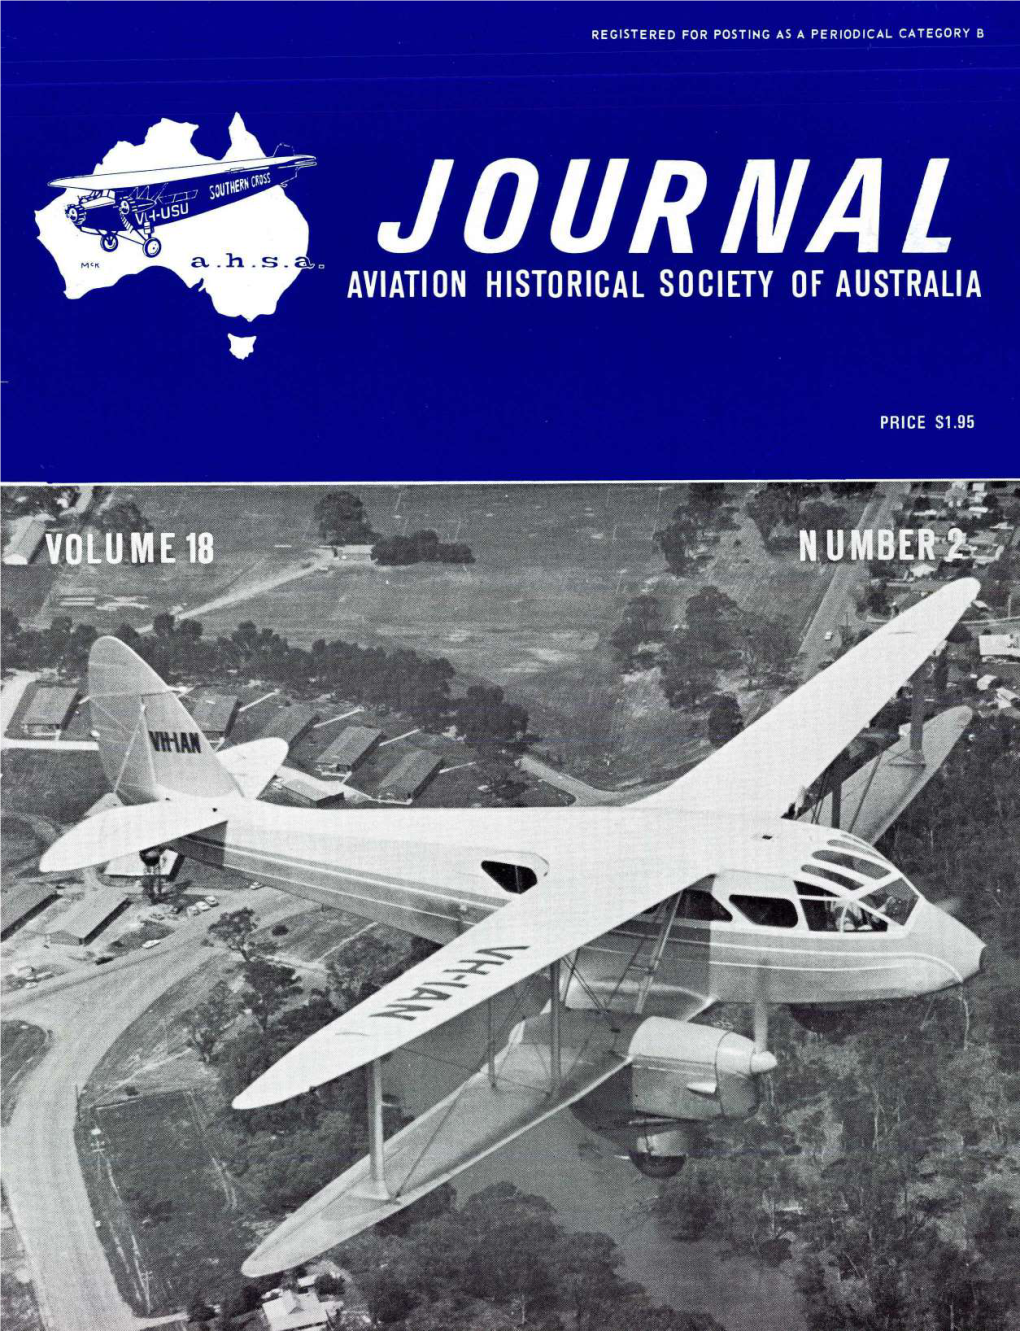 Journal Aviation Historical Society of Australia